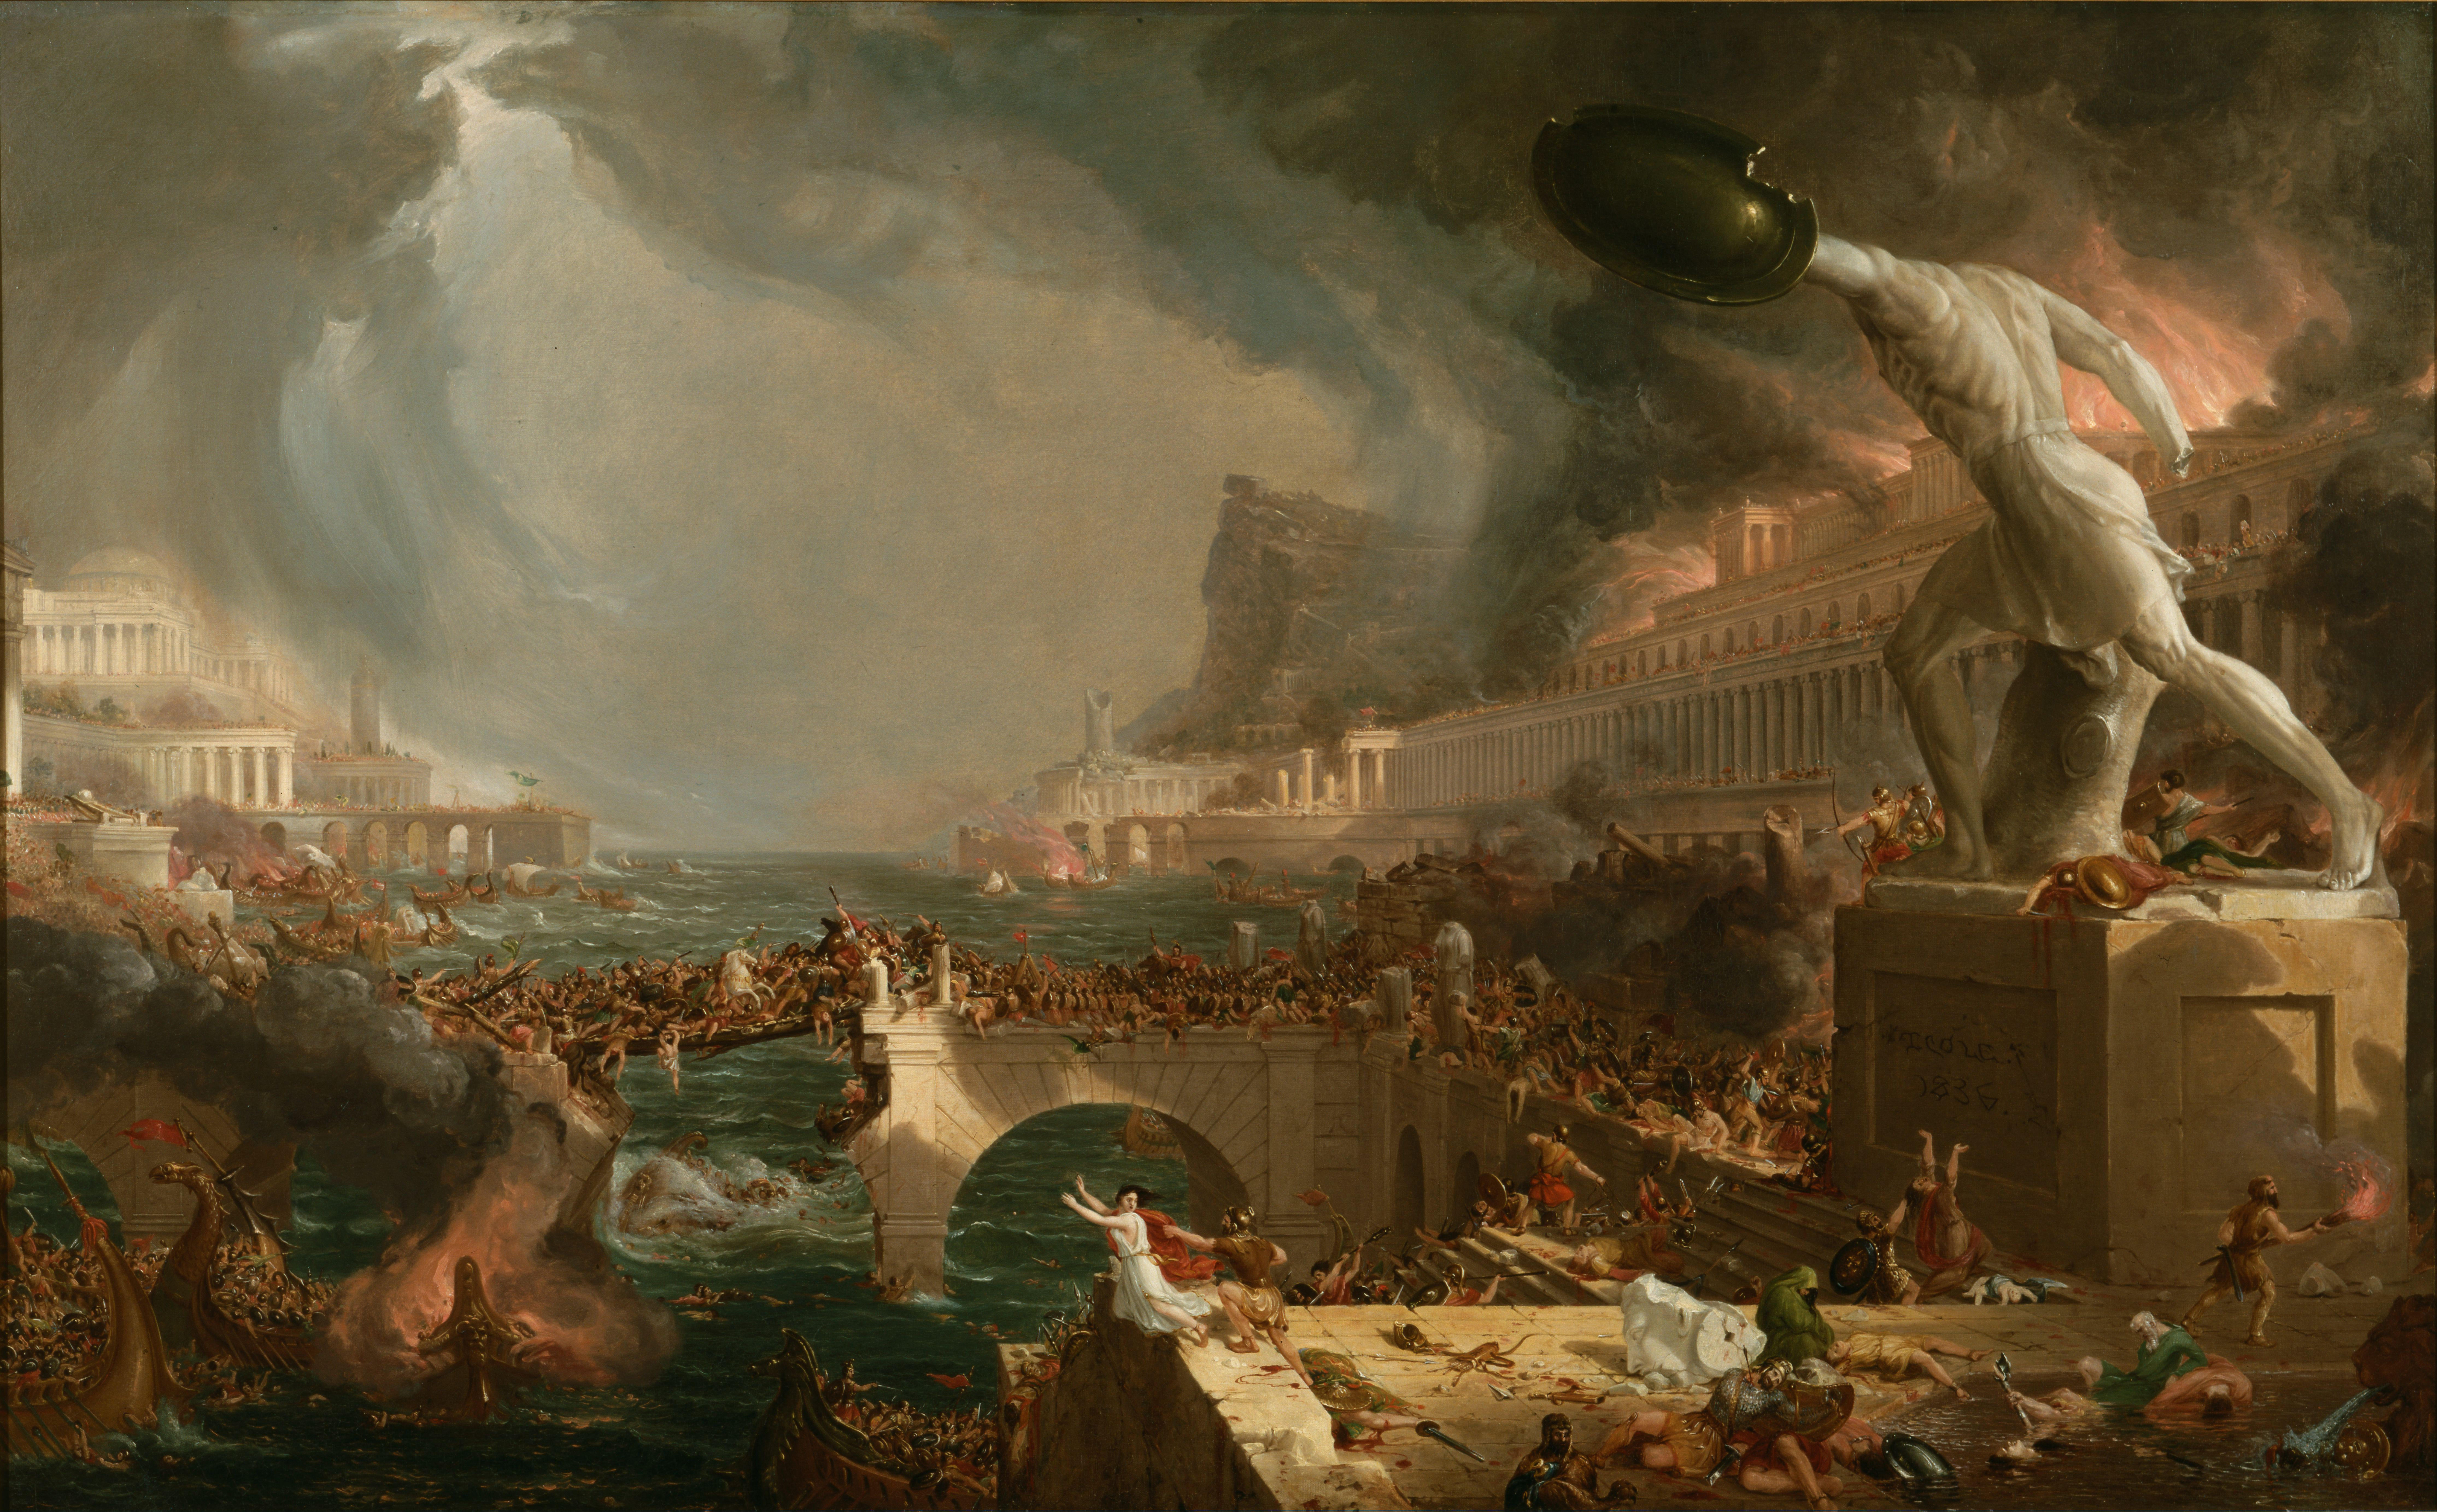 Thomas Cole, Destruction, 1833–1836. (Image source: Wikipedia).